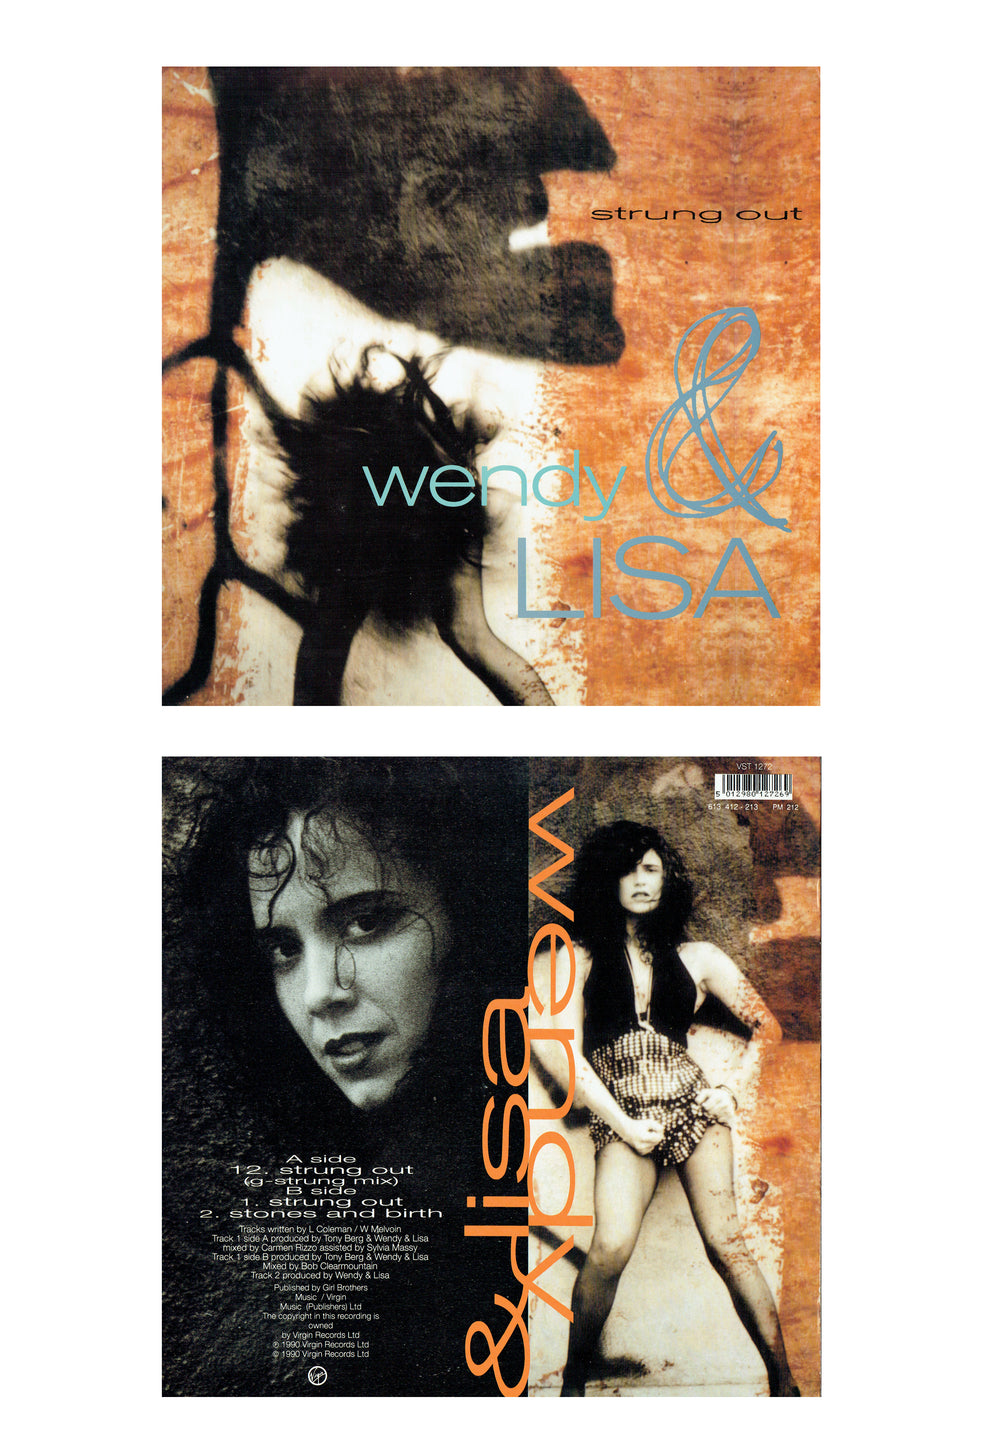 Wendy & Lisa Strung Out UK 12 Inch Vinyl 1990  3 Tracks Prince